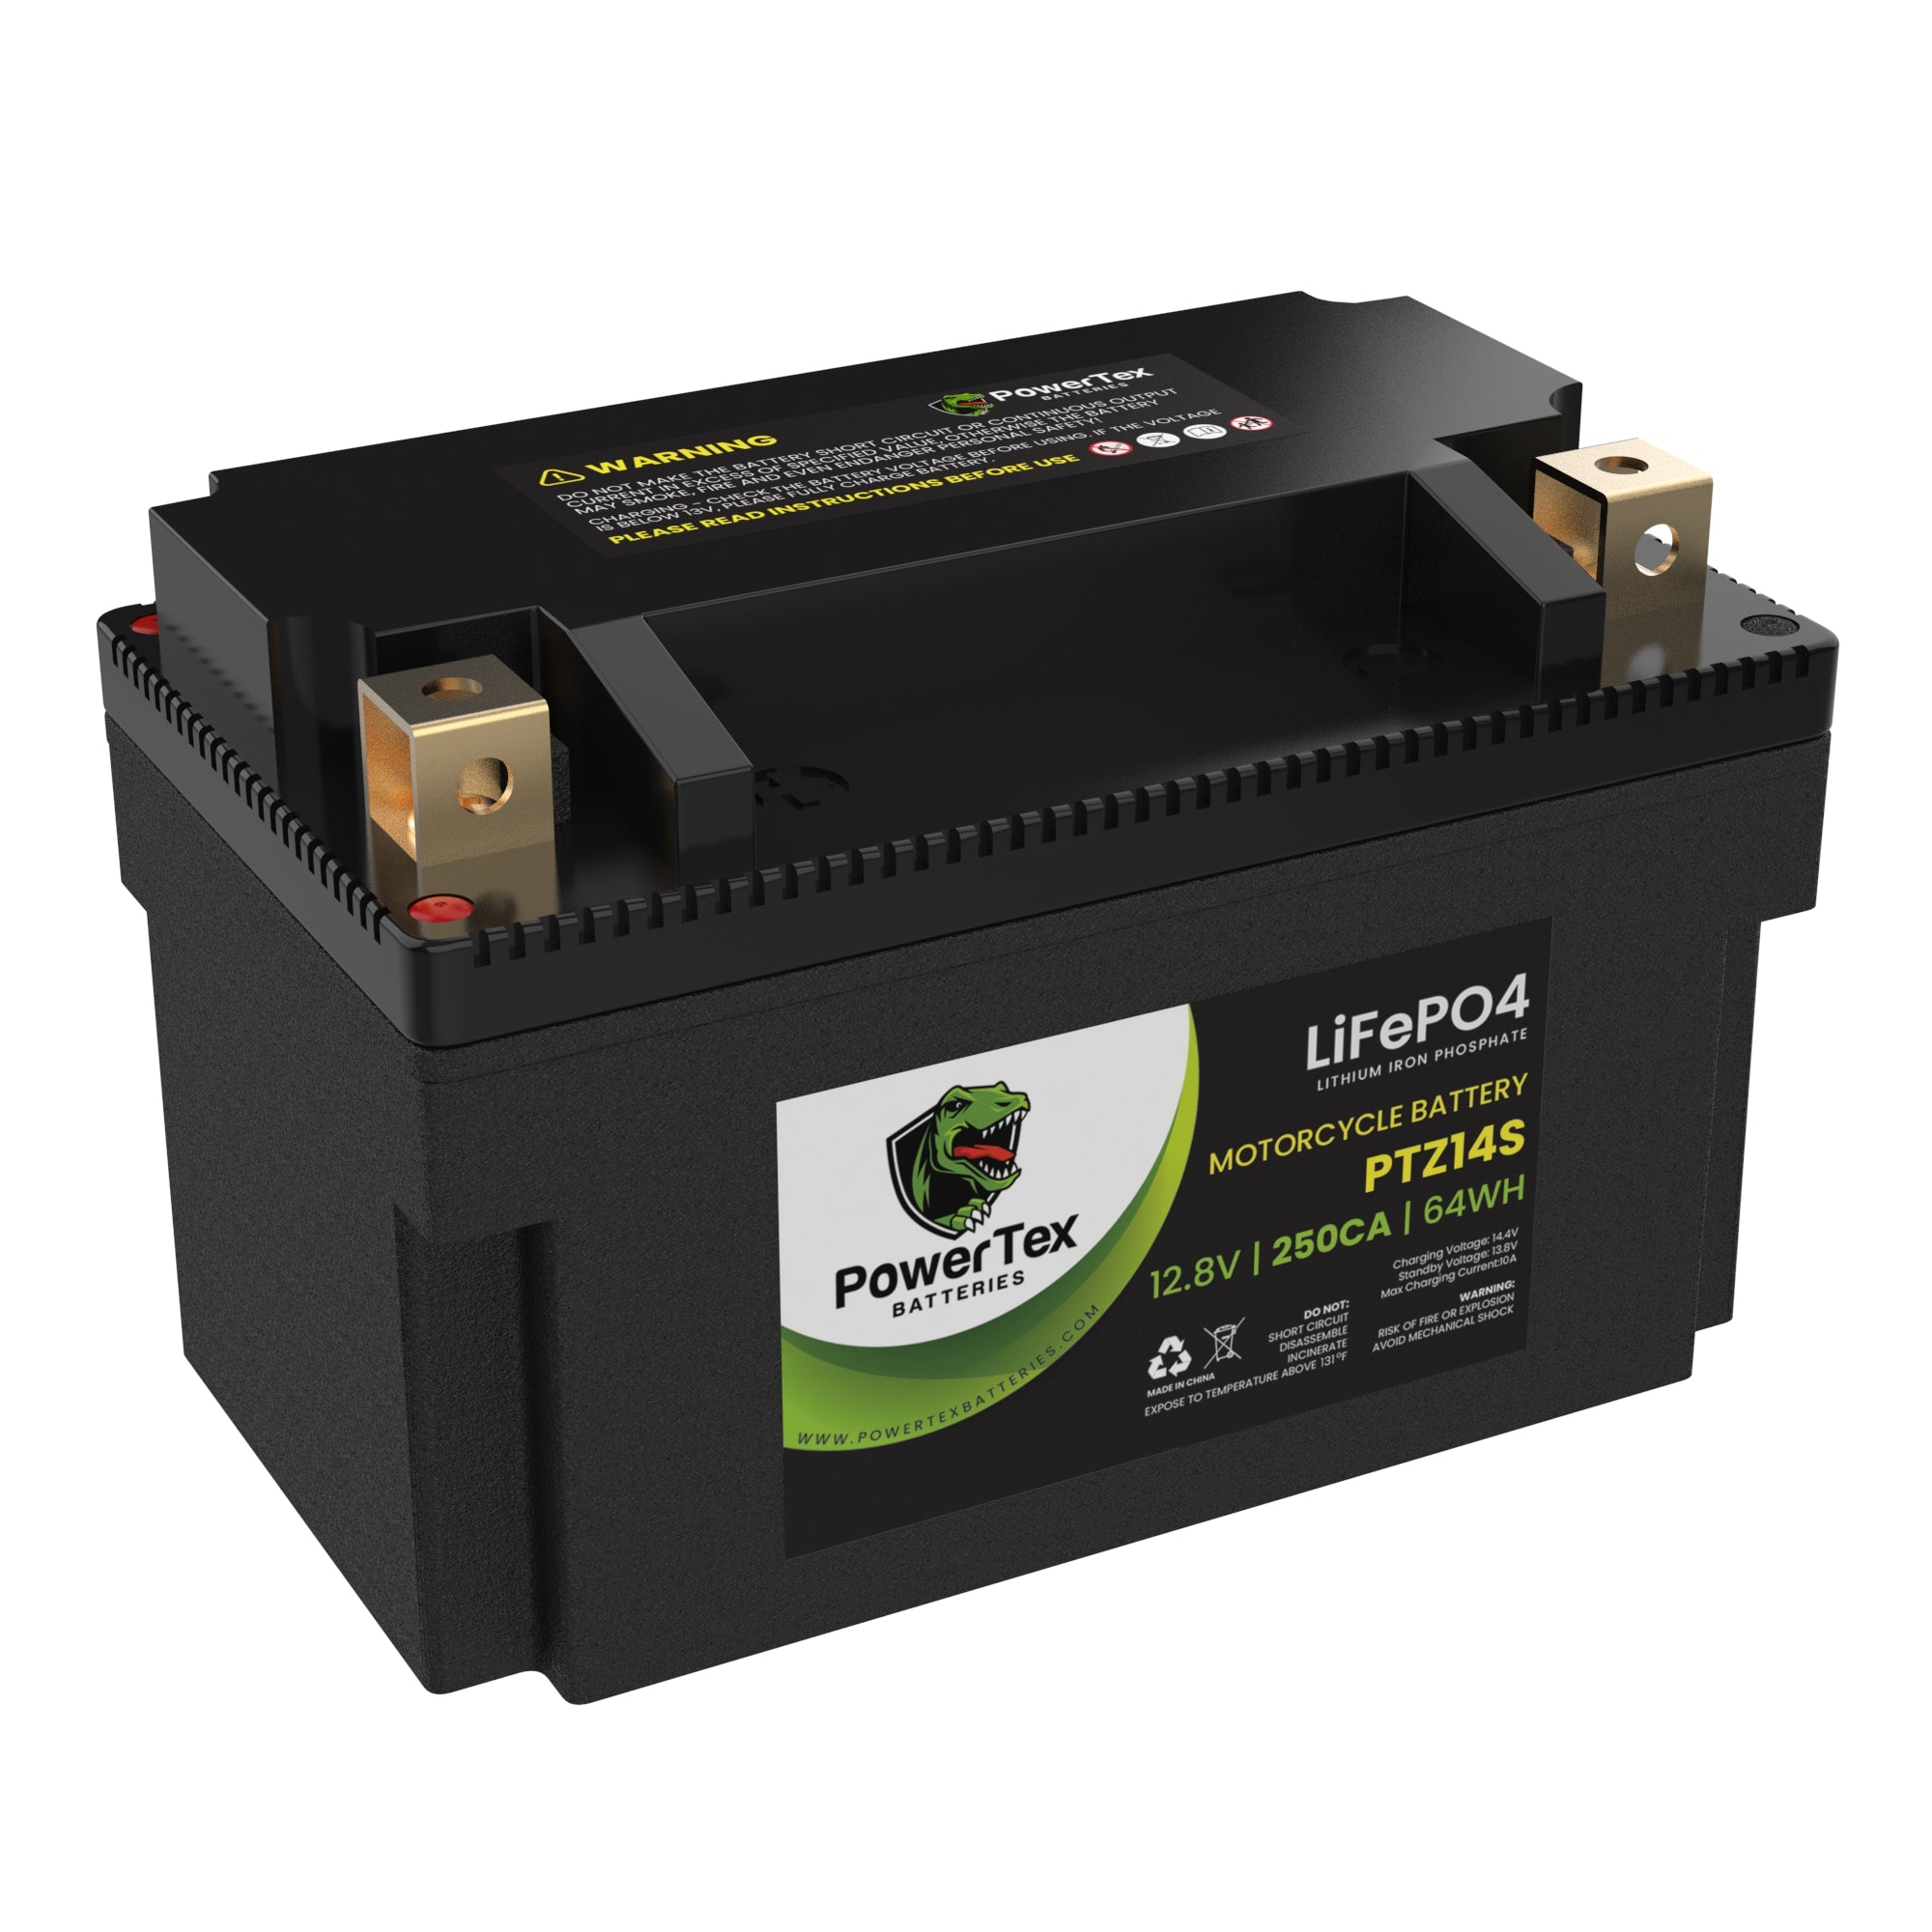 Powertex Batteries YTZ14S LiFePO4 lithium iron phosphate replacement motorcycle powersport battery